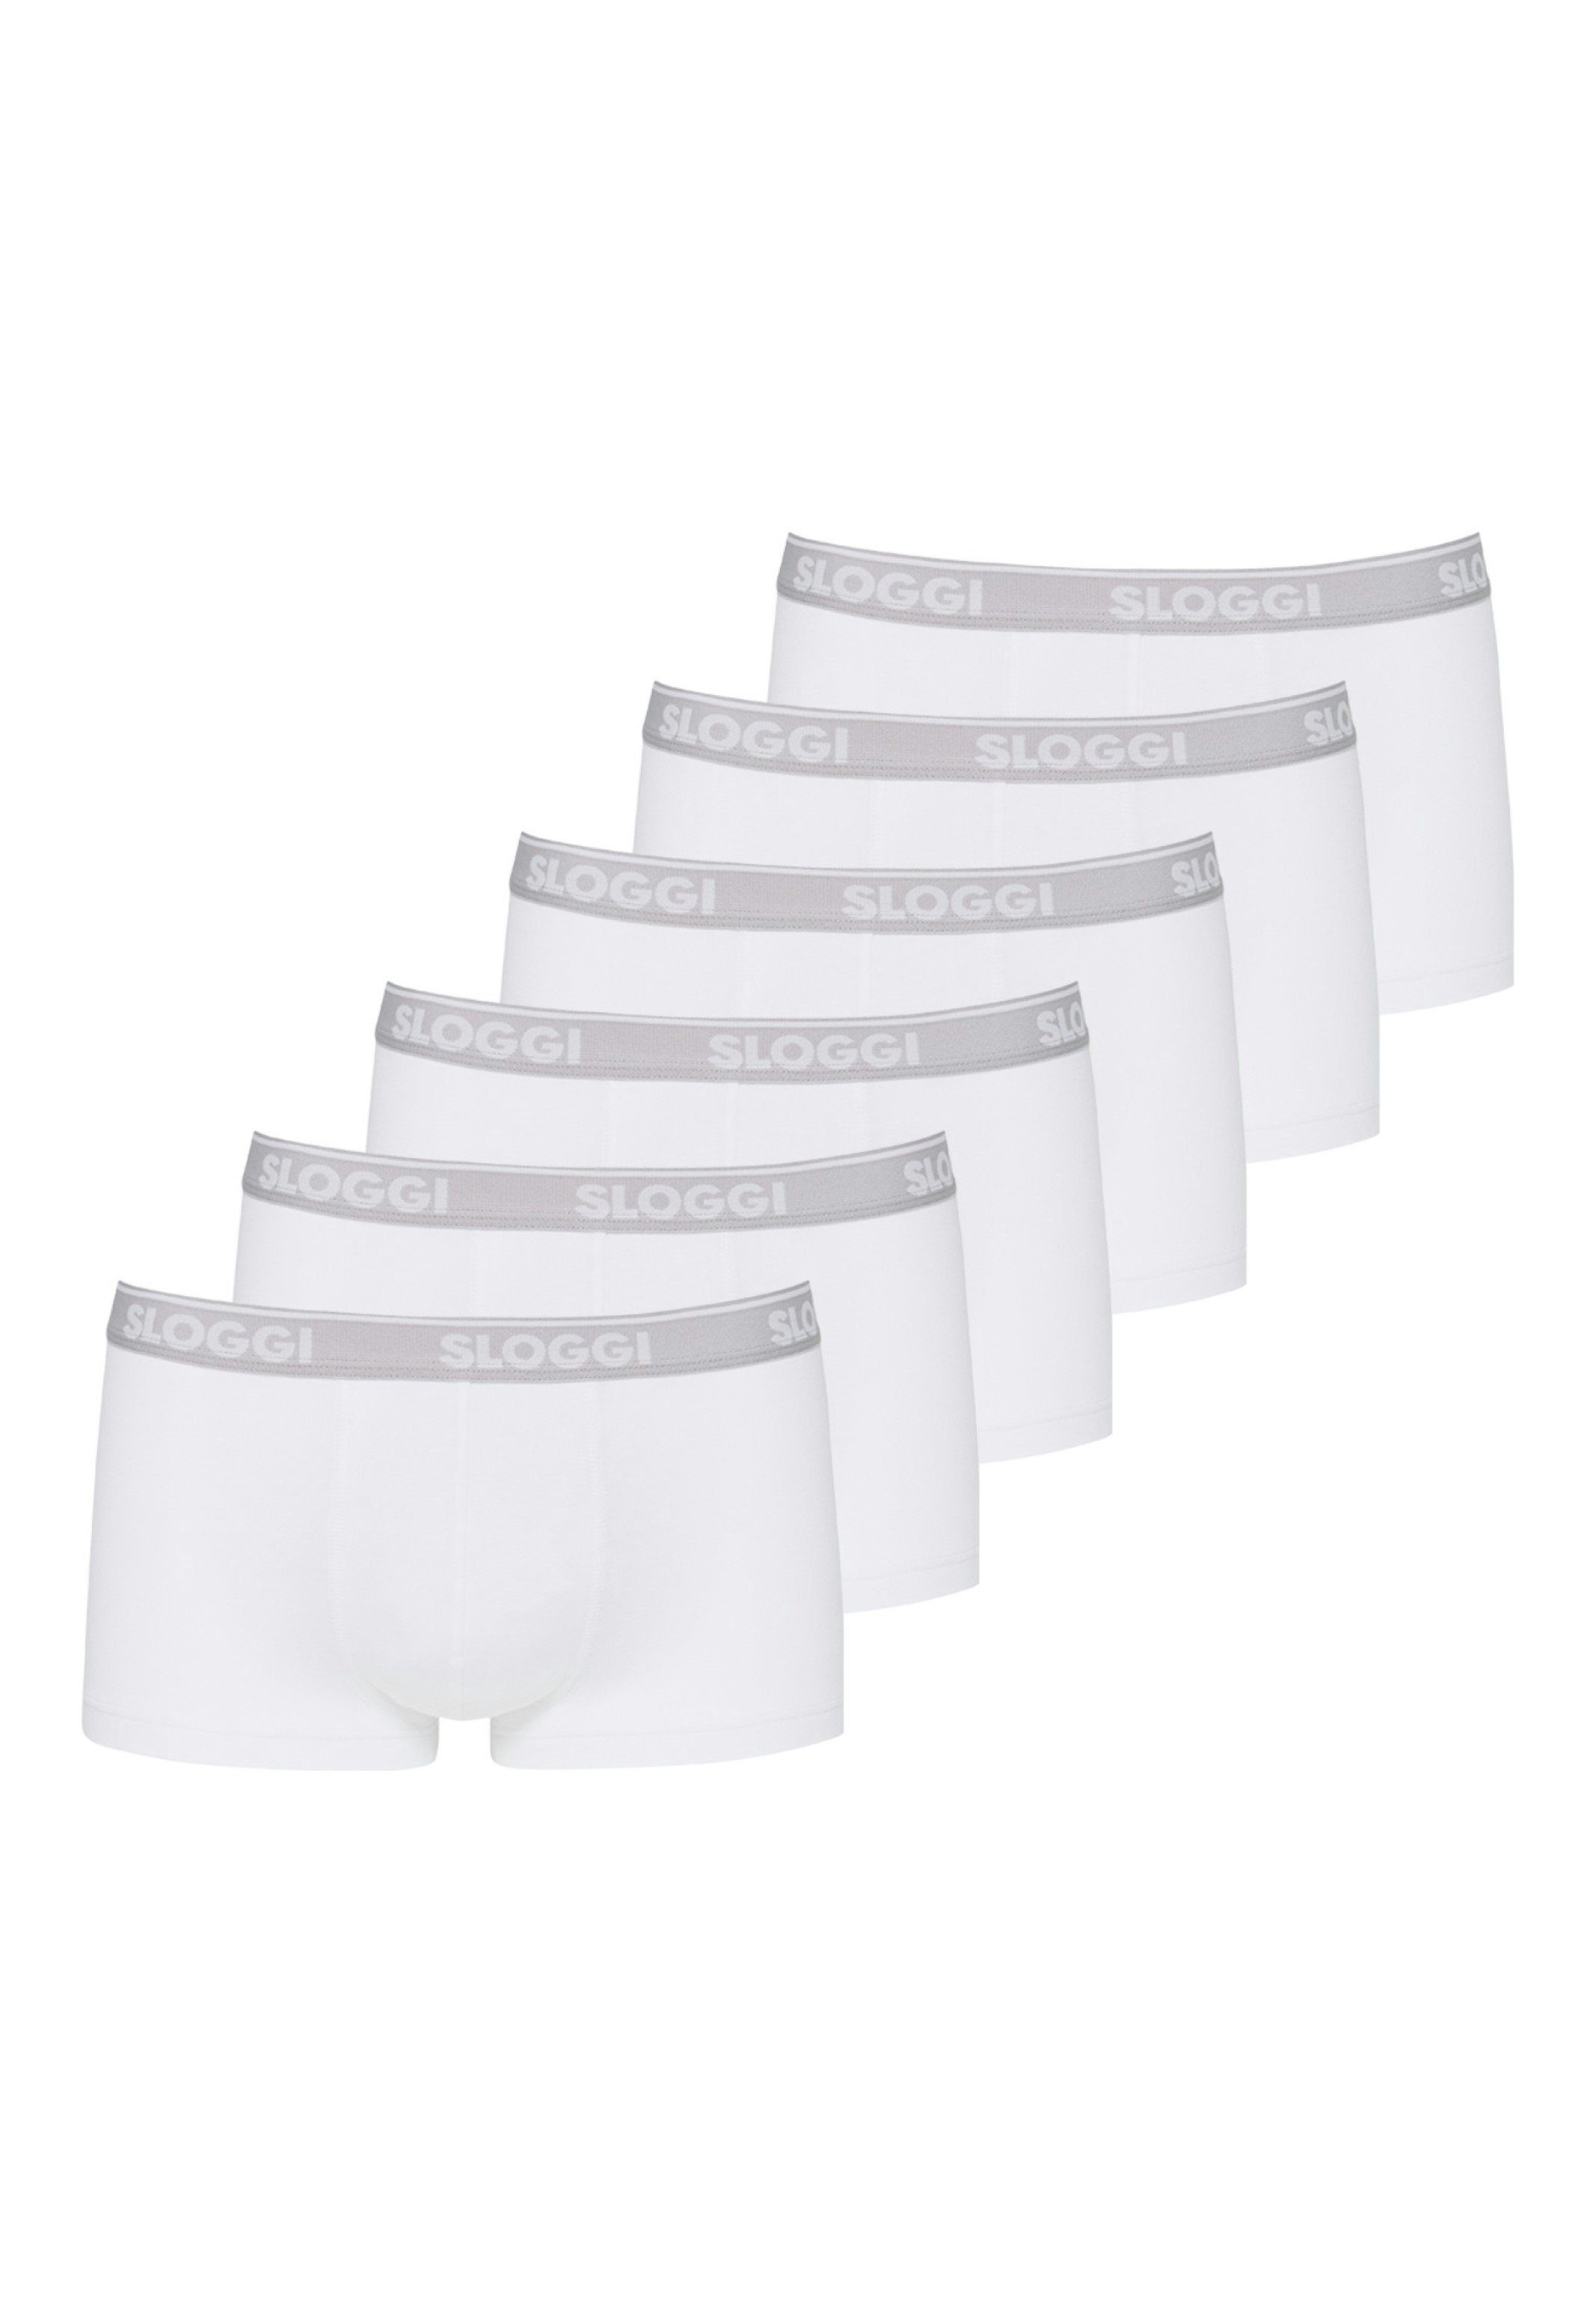 Sloggi Retro Boxer 6er Pack Baumwolle (Spar-Set, ABC / - - 6-St) Hipster - Eingriff Weiß Go Ohne Perfekte Passform Pant